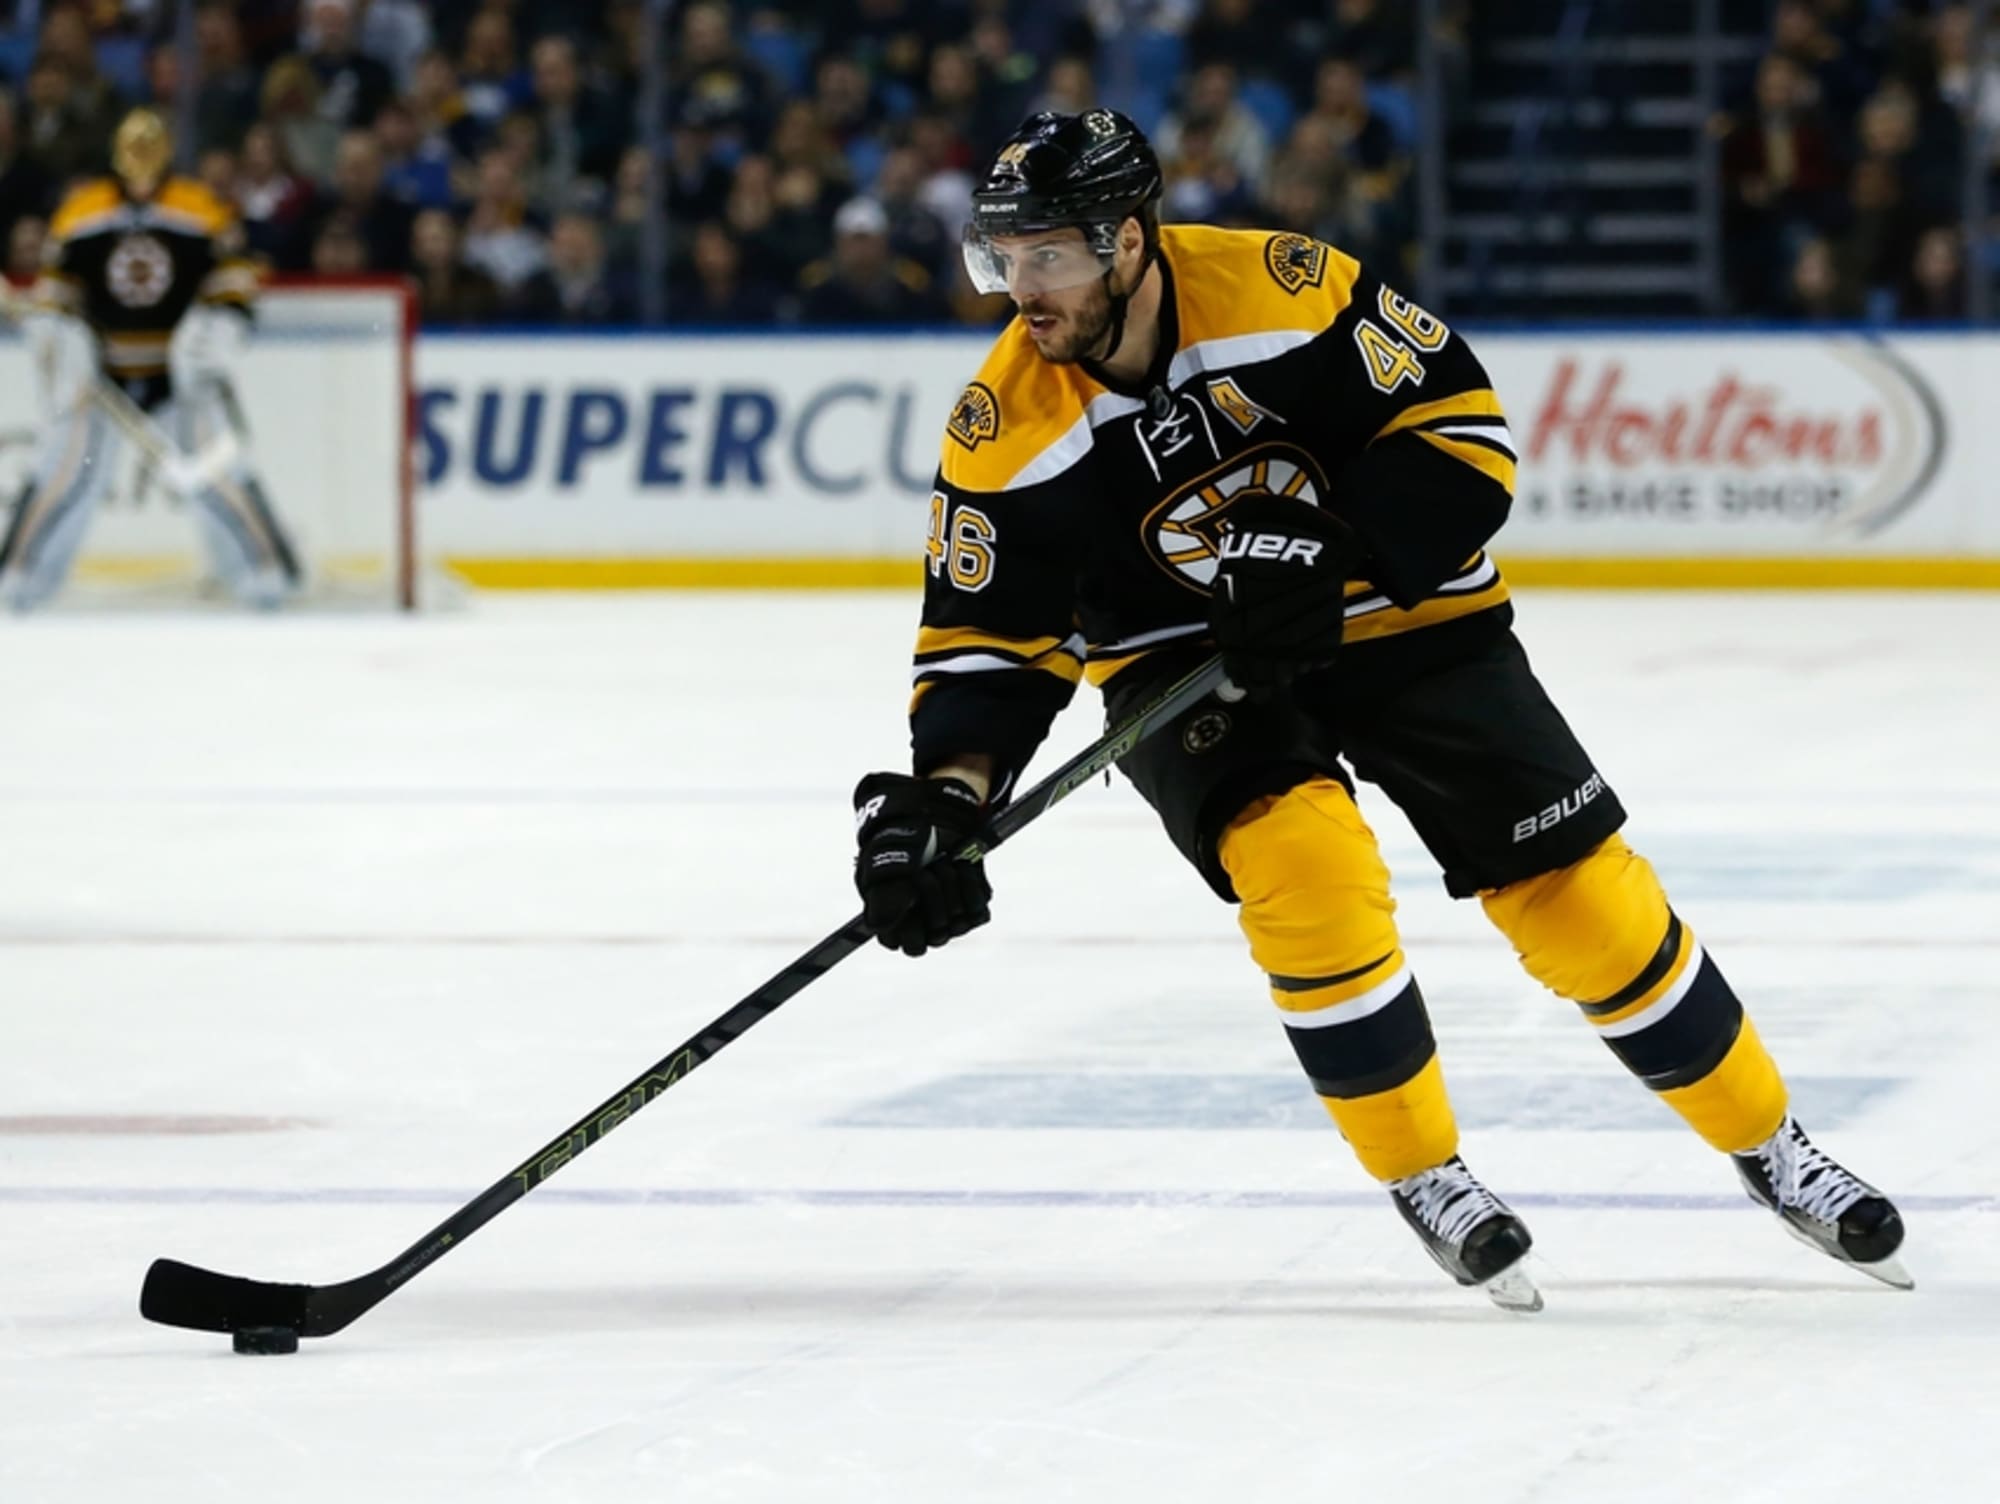 David Krejci returning to Bruins on one-year deal - CBS Boston